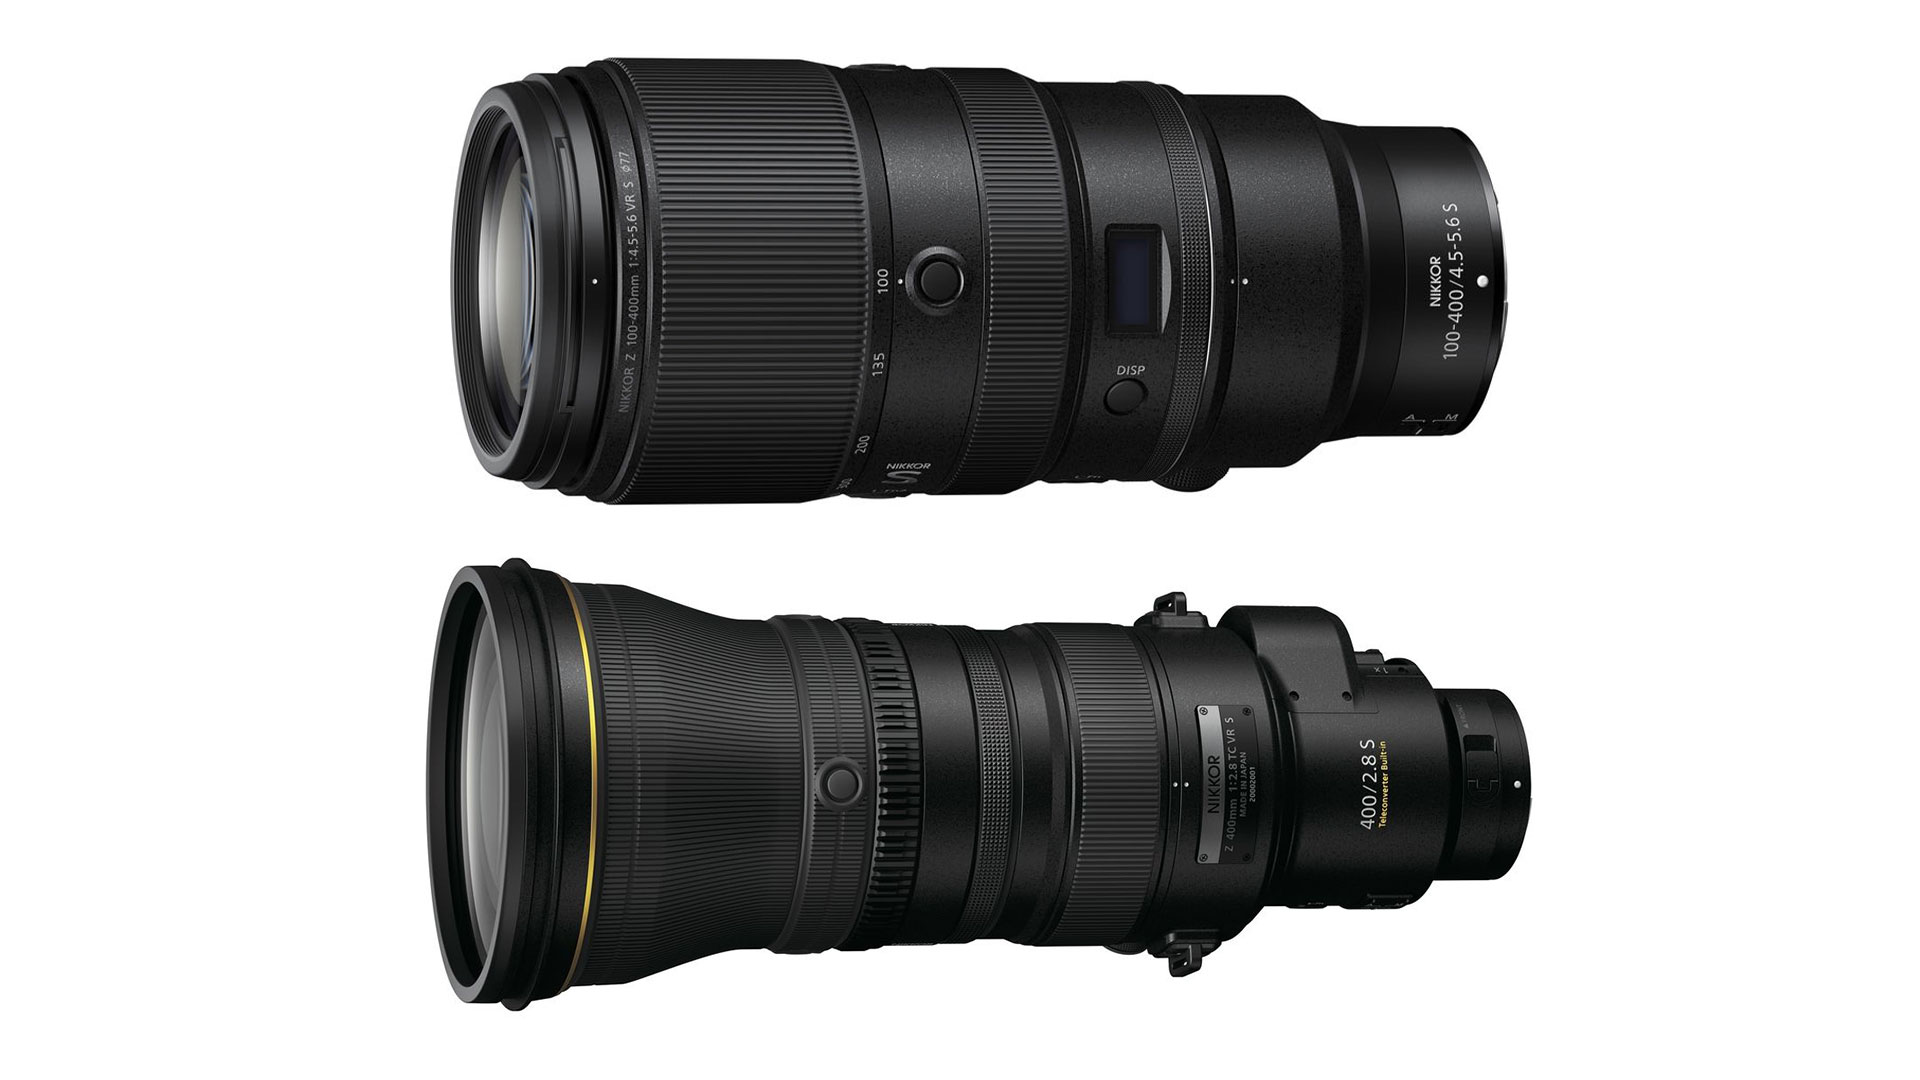 Nikon NIKKOR Z 100-400mm F/4.5-5.6 VR S and NIKKOR Z 400mm F/2.8 